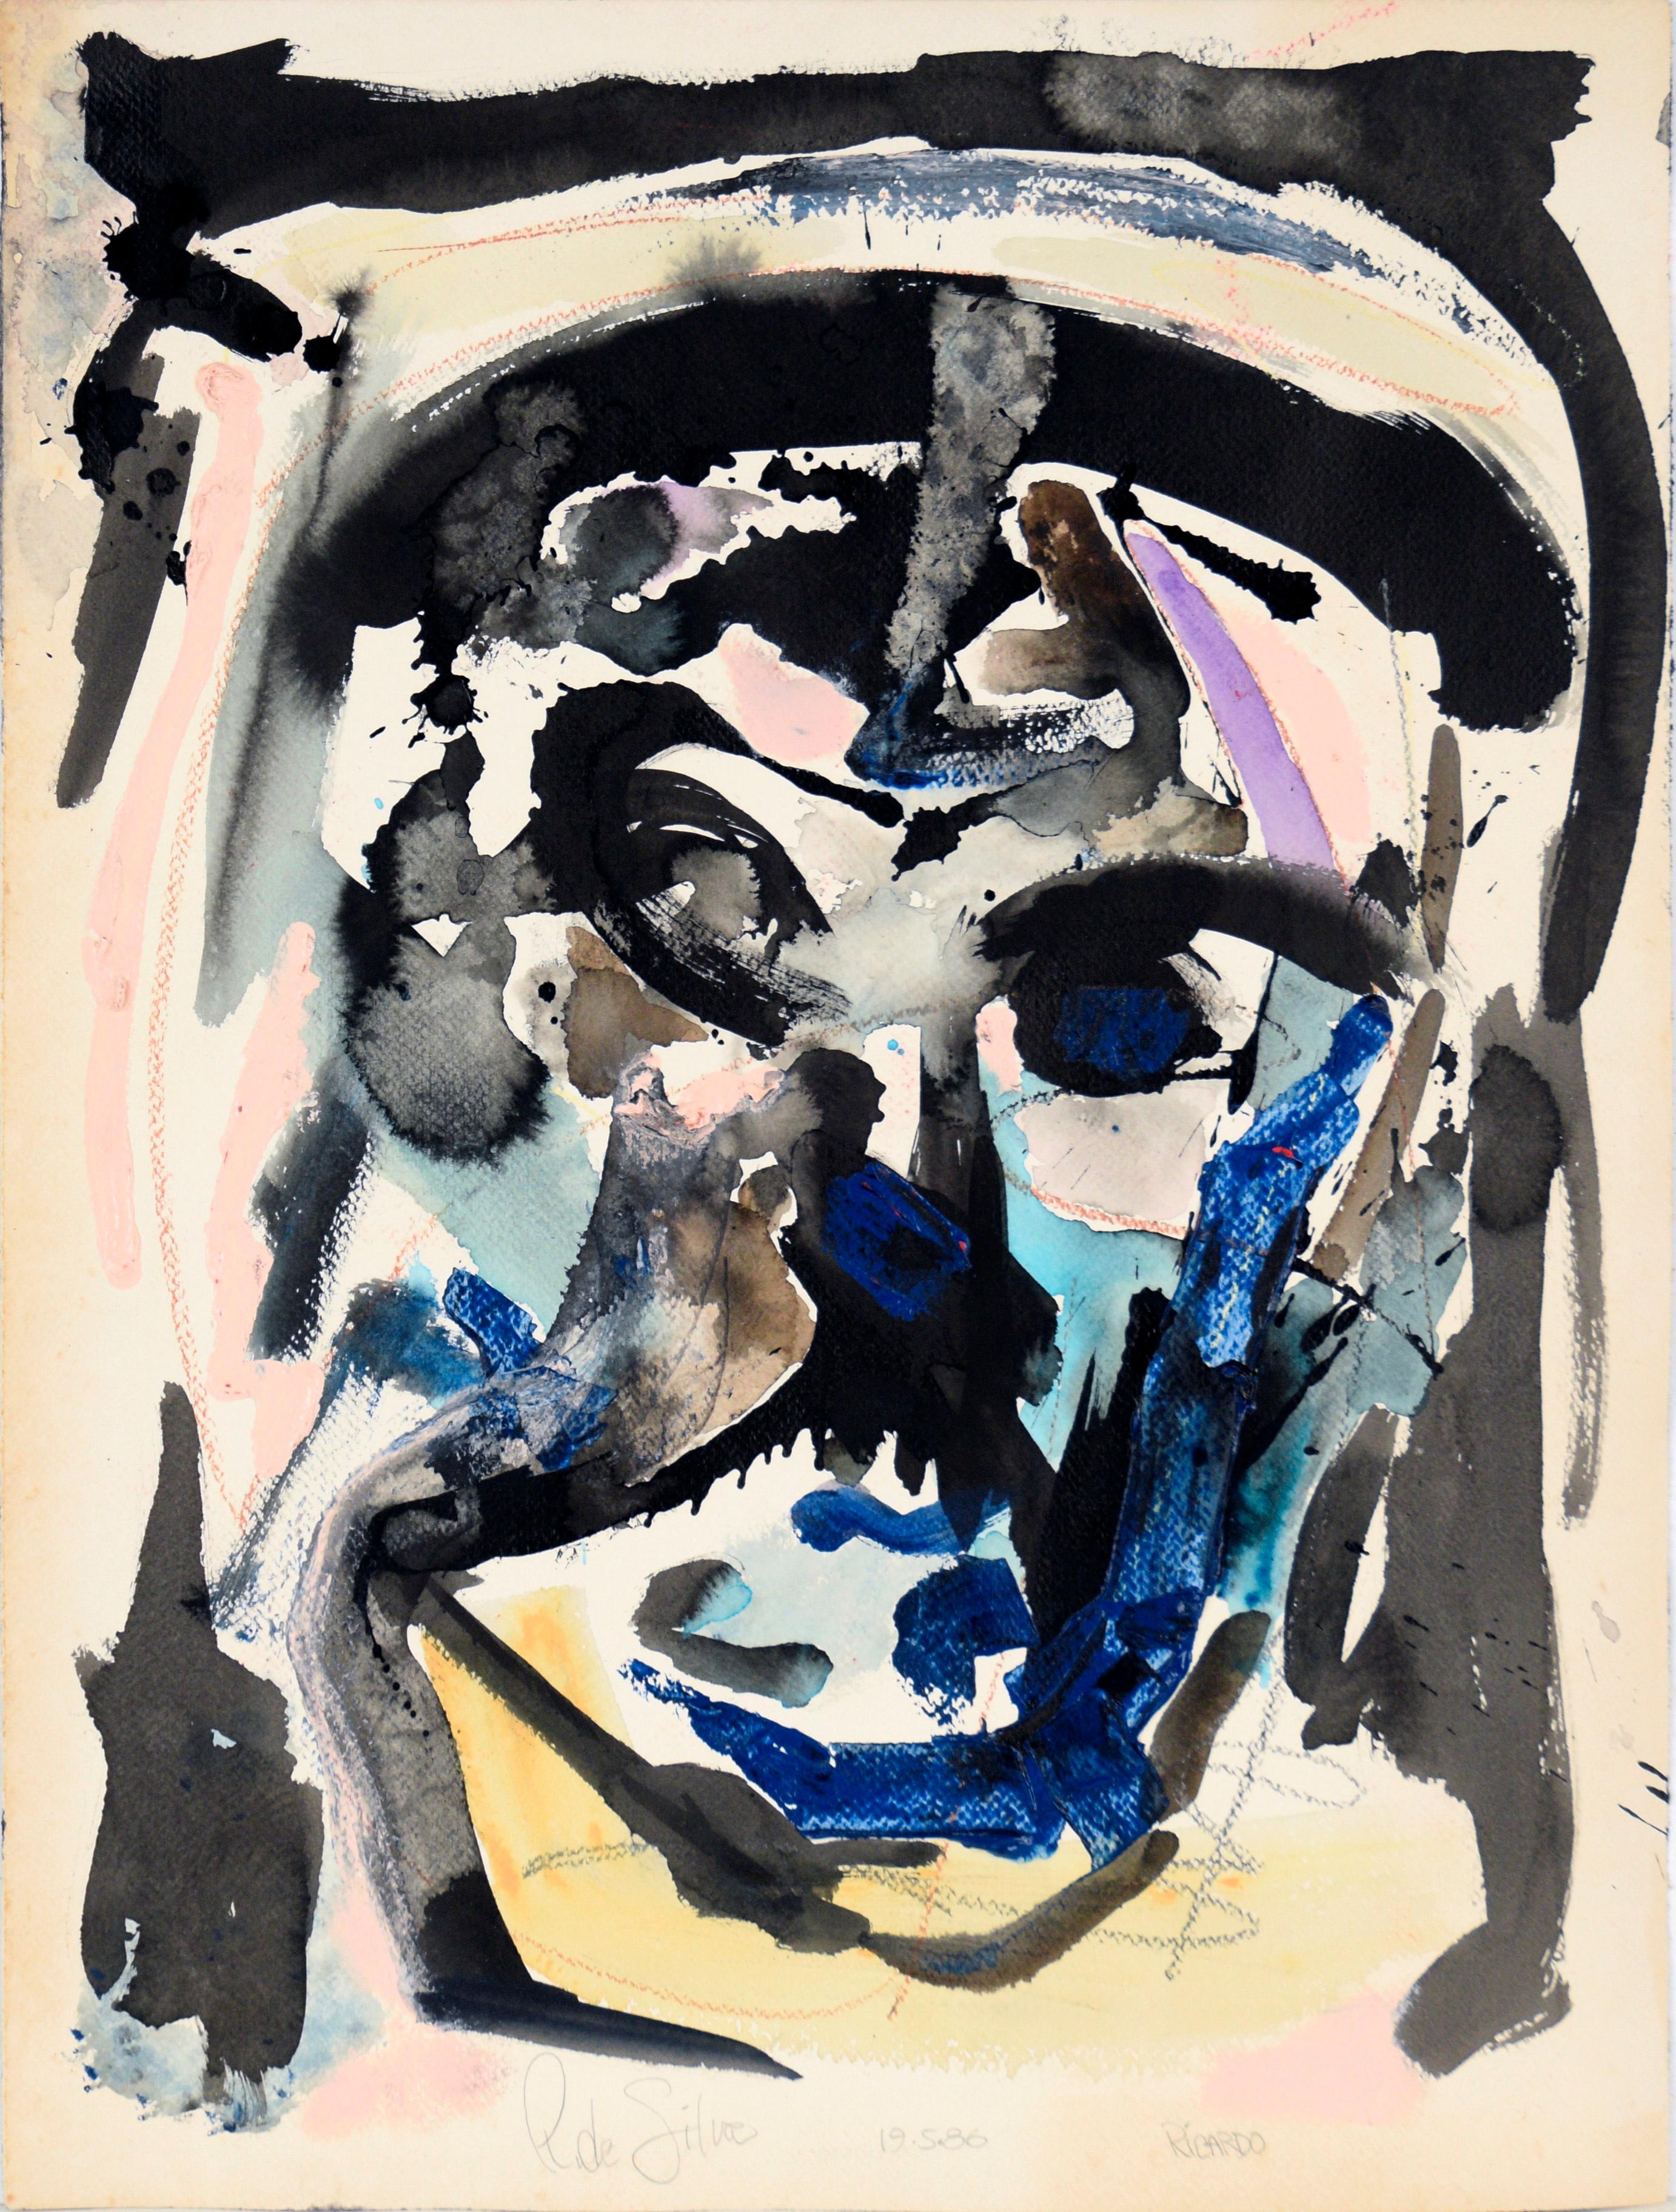 Ricardo de Silva Abstract Painting – "Ricardo" - Abstraktes expressionistisches Self-Portrait in Acryl auf Papier